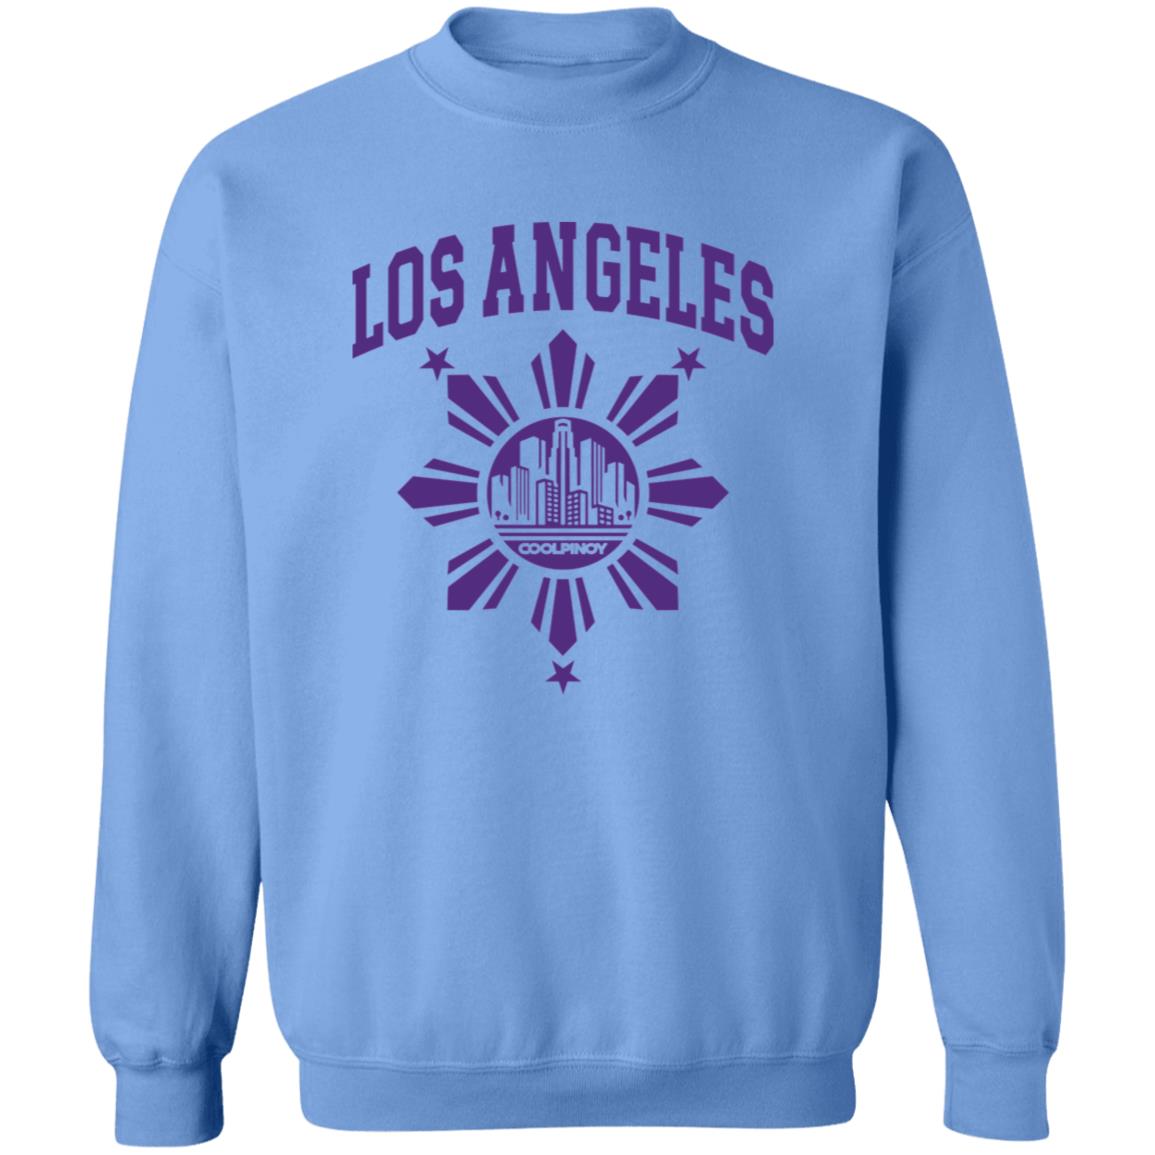 Los Angeles with Sun and Stars Unisex Crewneck Pullover Sweatshirt